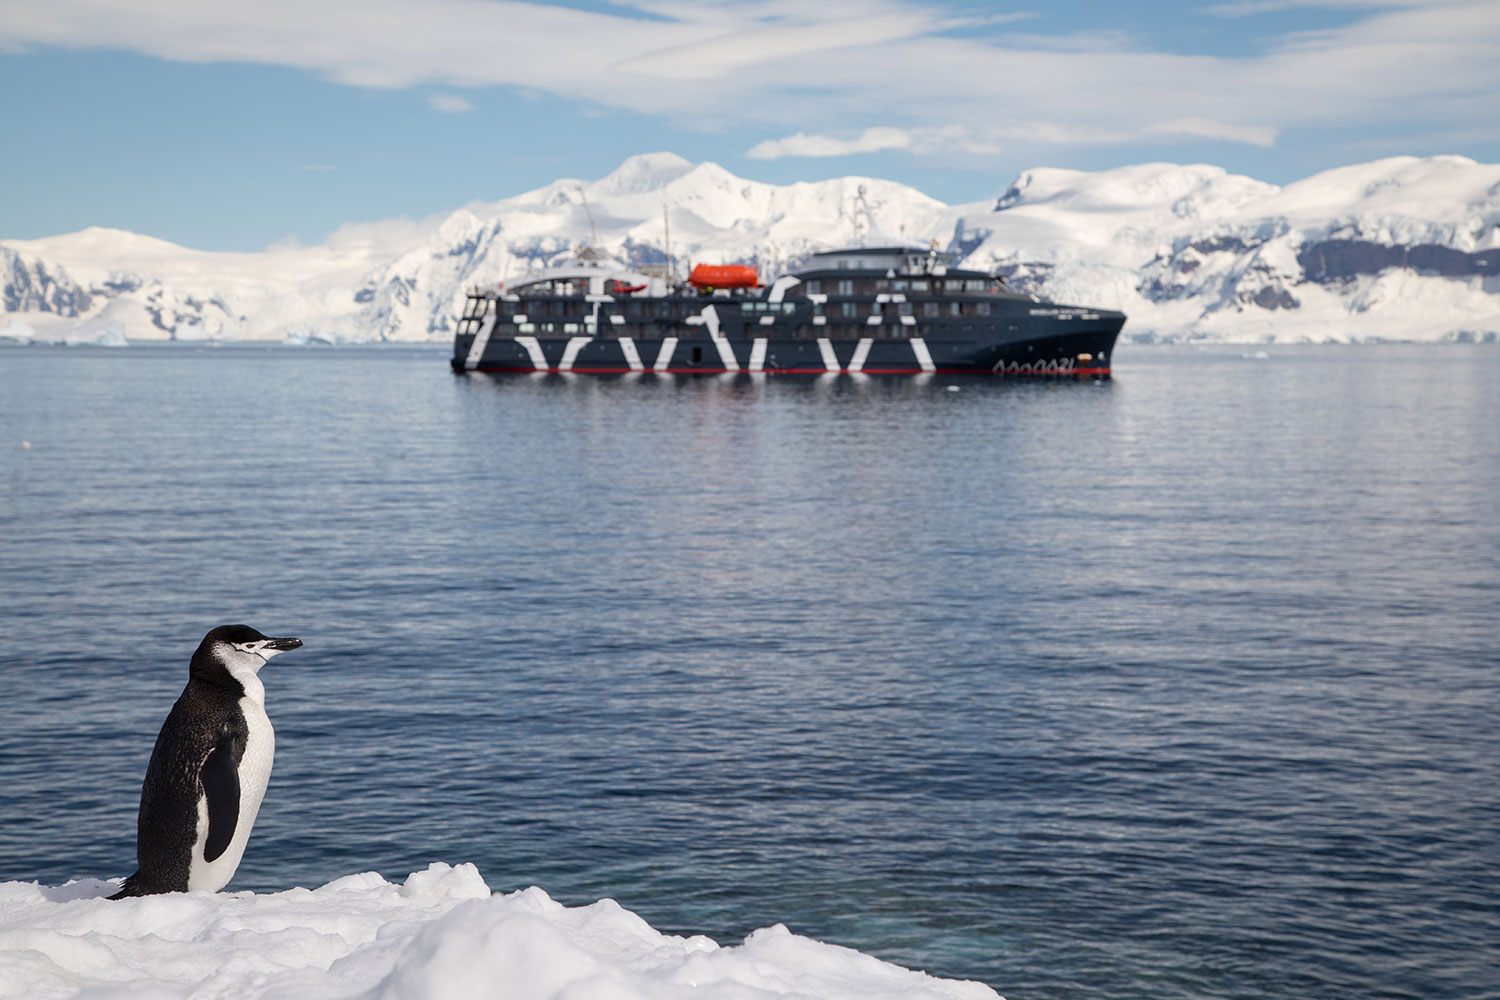 Magellan Explorer – Luxury Polar Cruise Ship